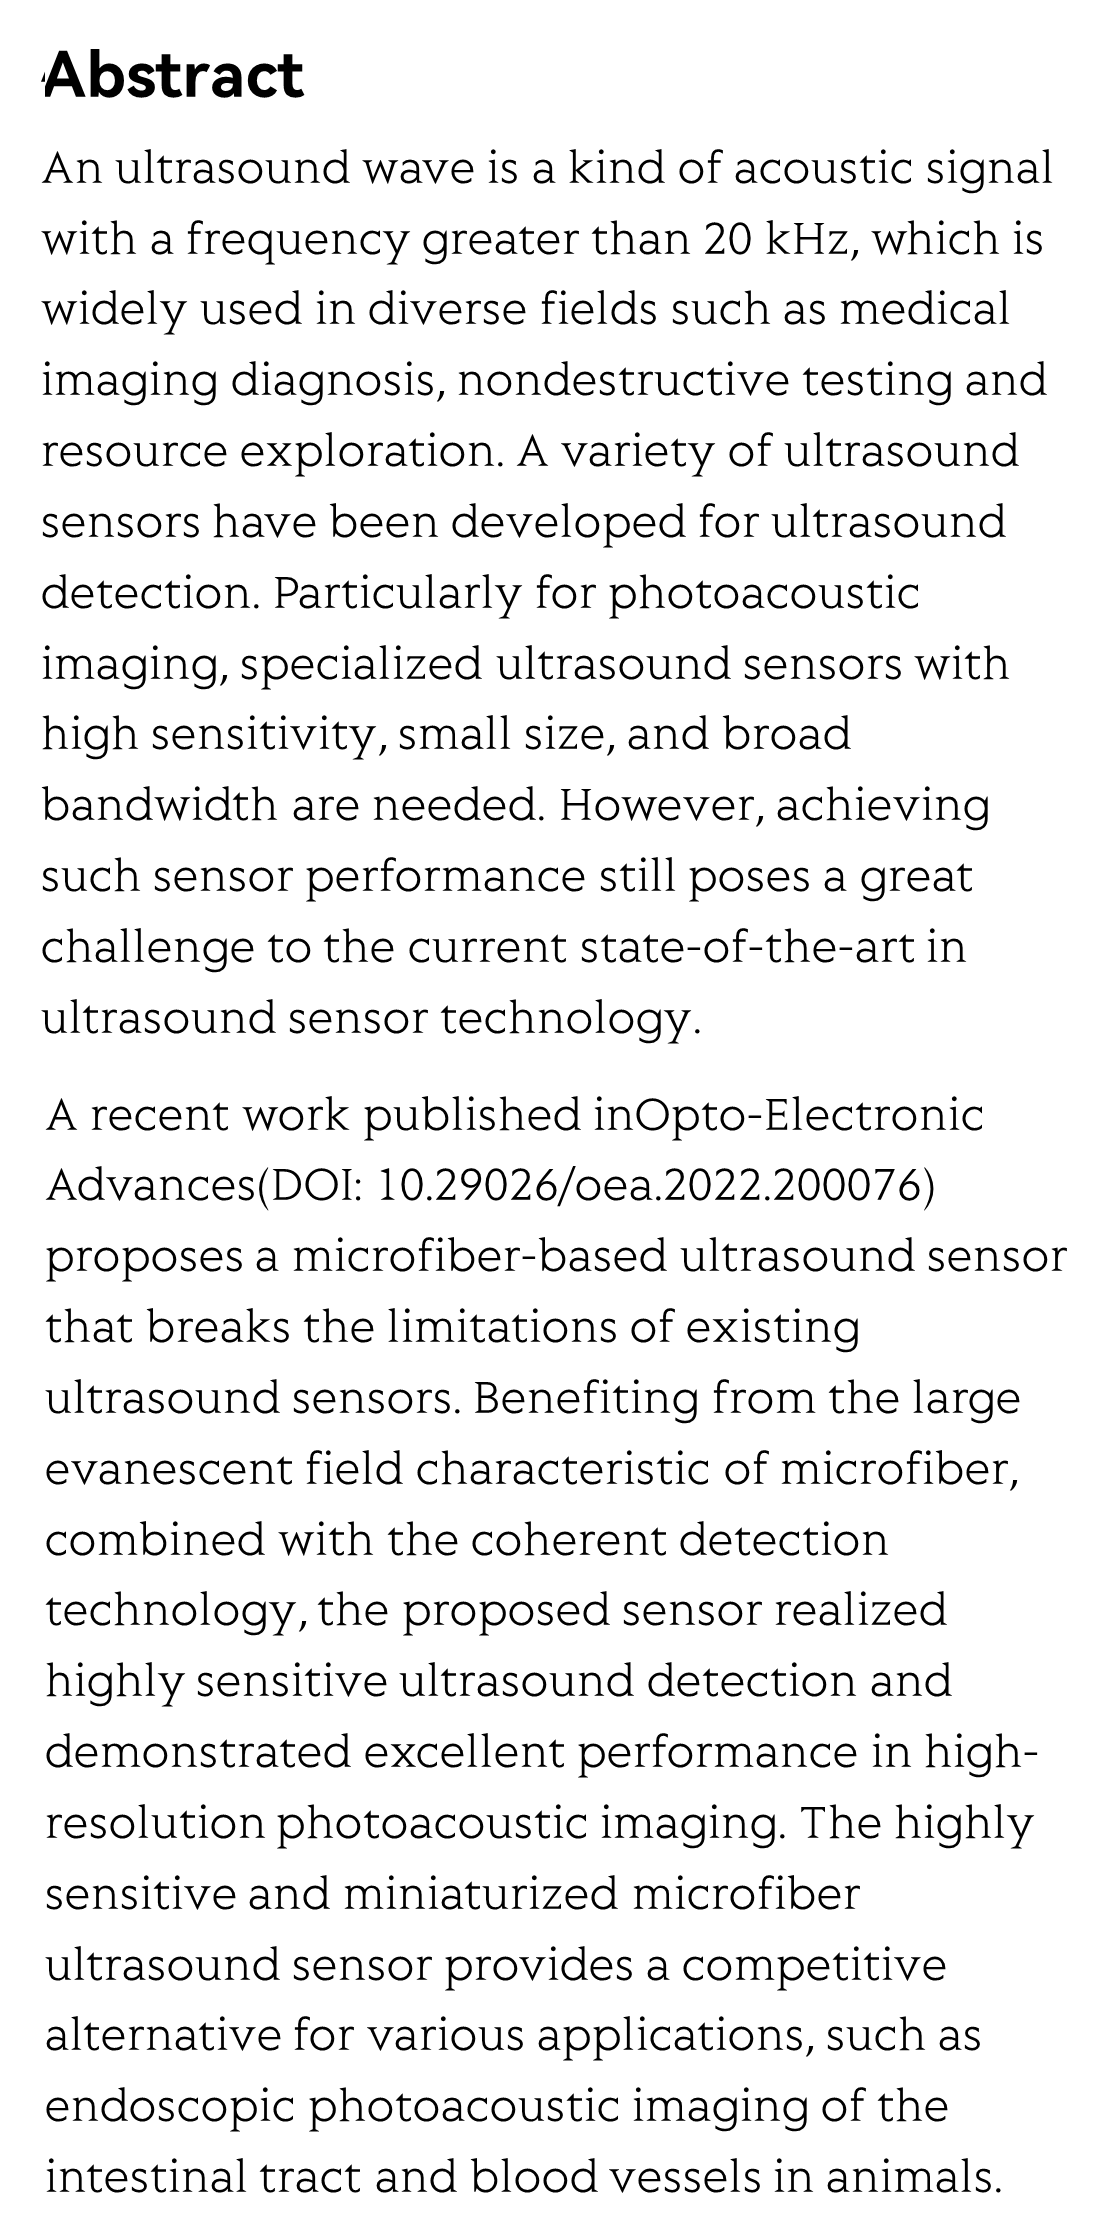 Highly sensitive microfiber ultrasound sensor for photoacoustic imaging_2